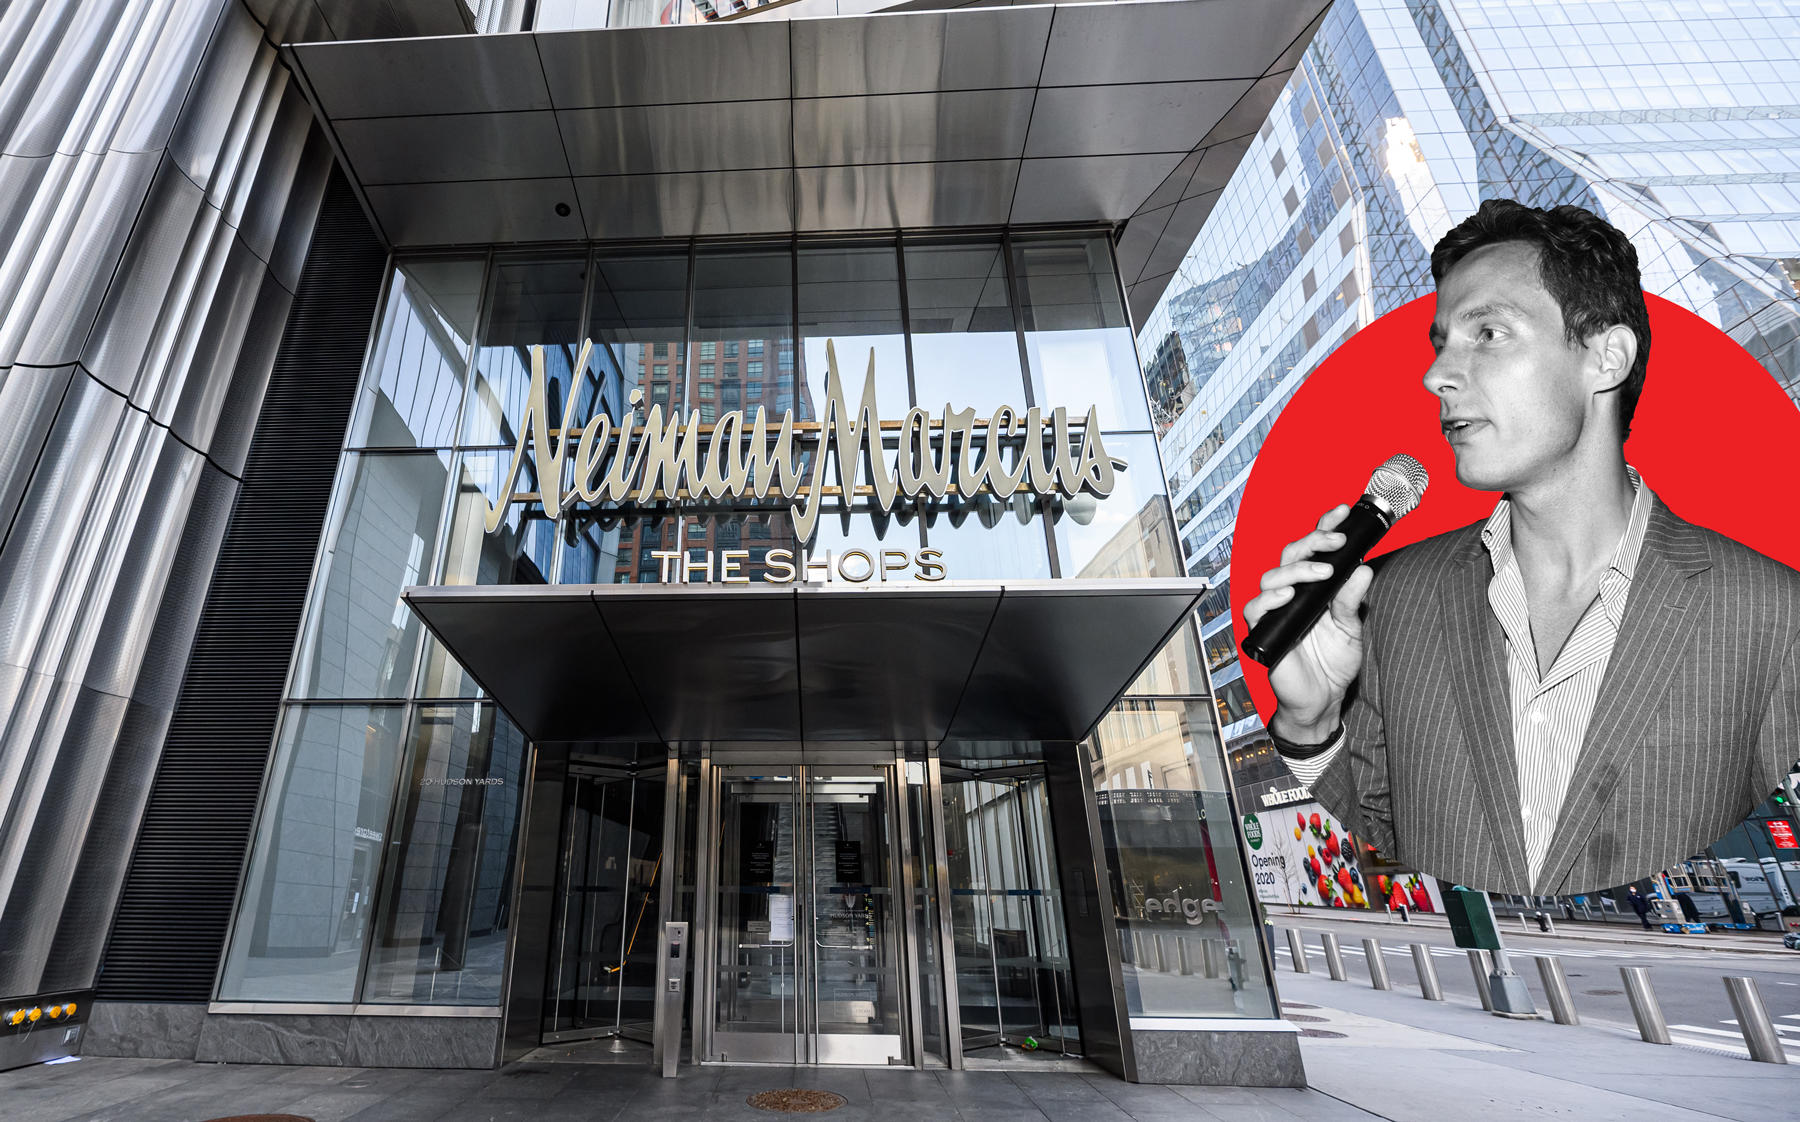 Neiman Marcus at Hudson Yards in New York and Neiman Marcus CEO Geoffroy van Raemdonck (Credit: Neiman Marcus by Noam Galai/Getty Images; van Raemdonck by JOE SCHILDHORN/Patrick McMullan via Getty Images )